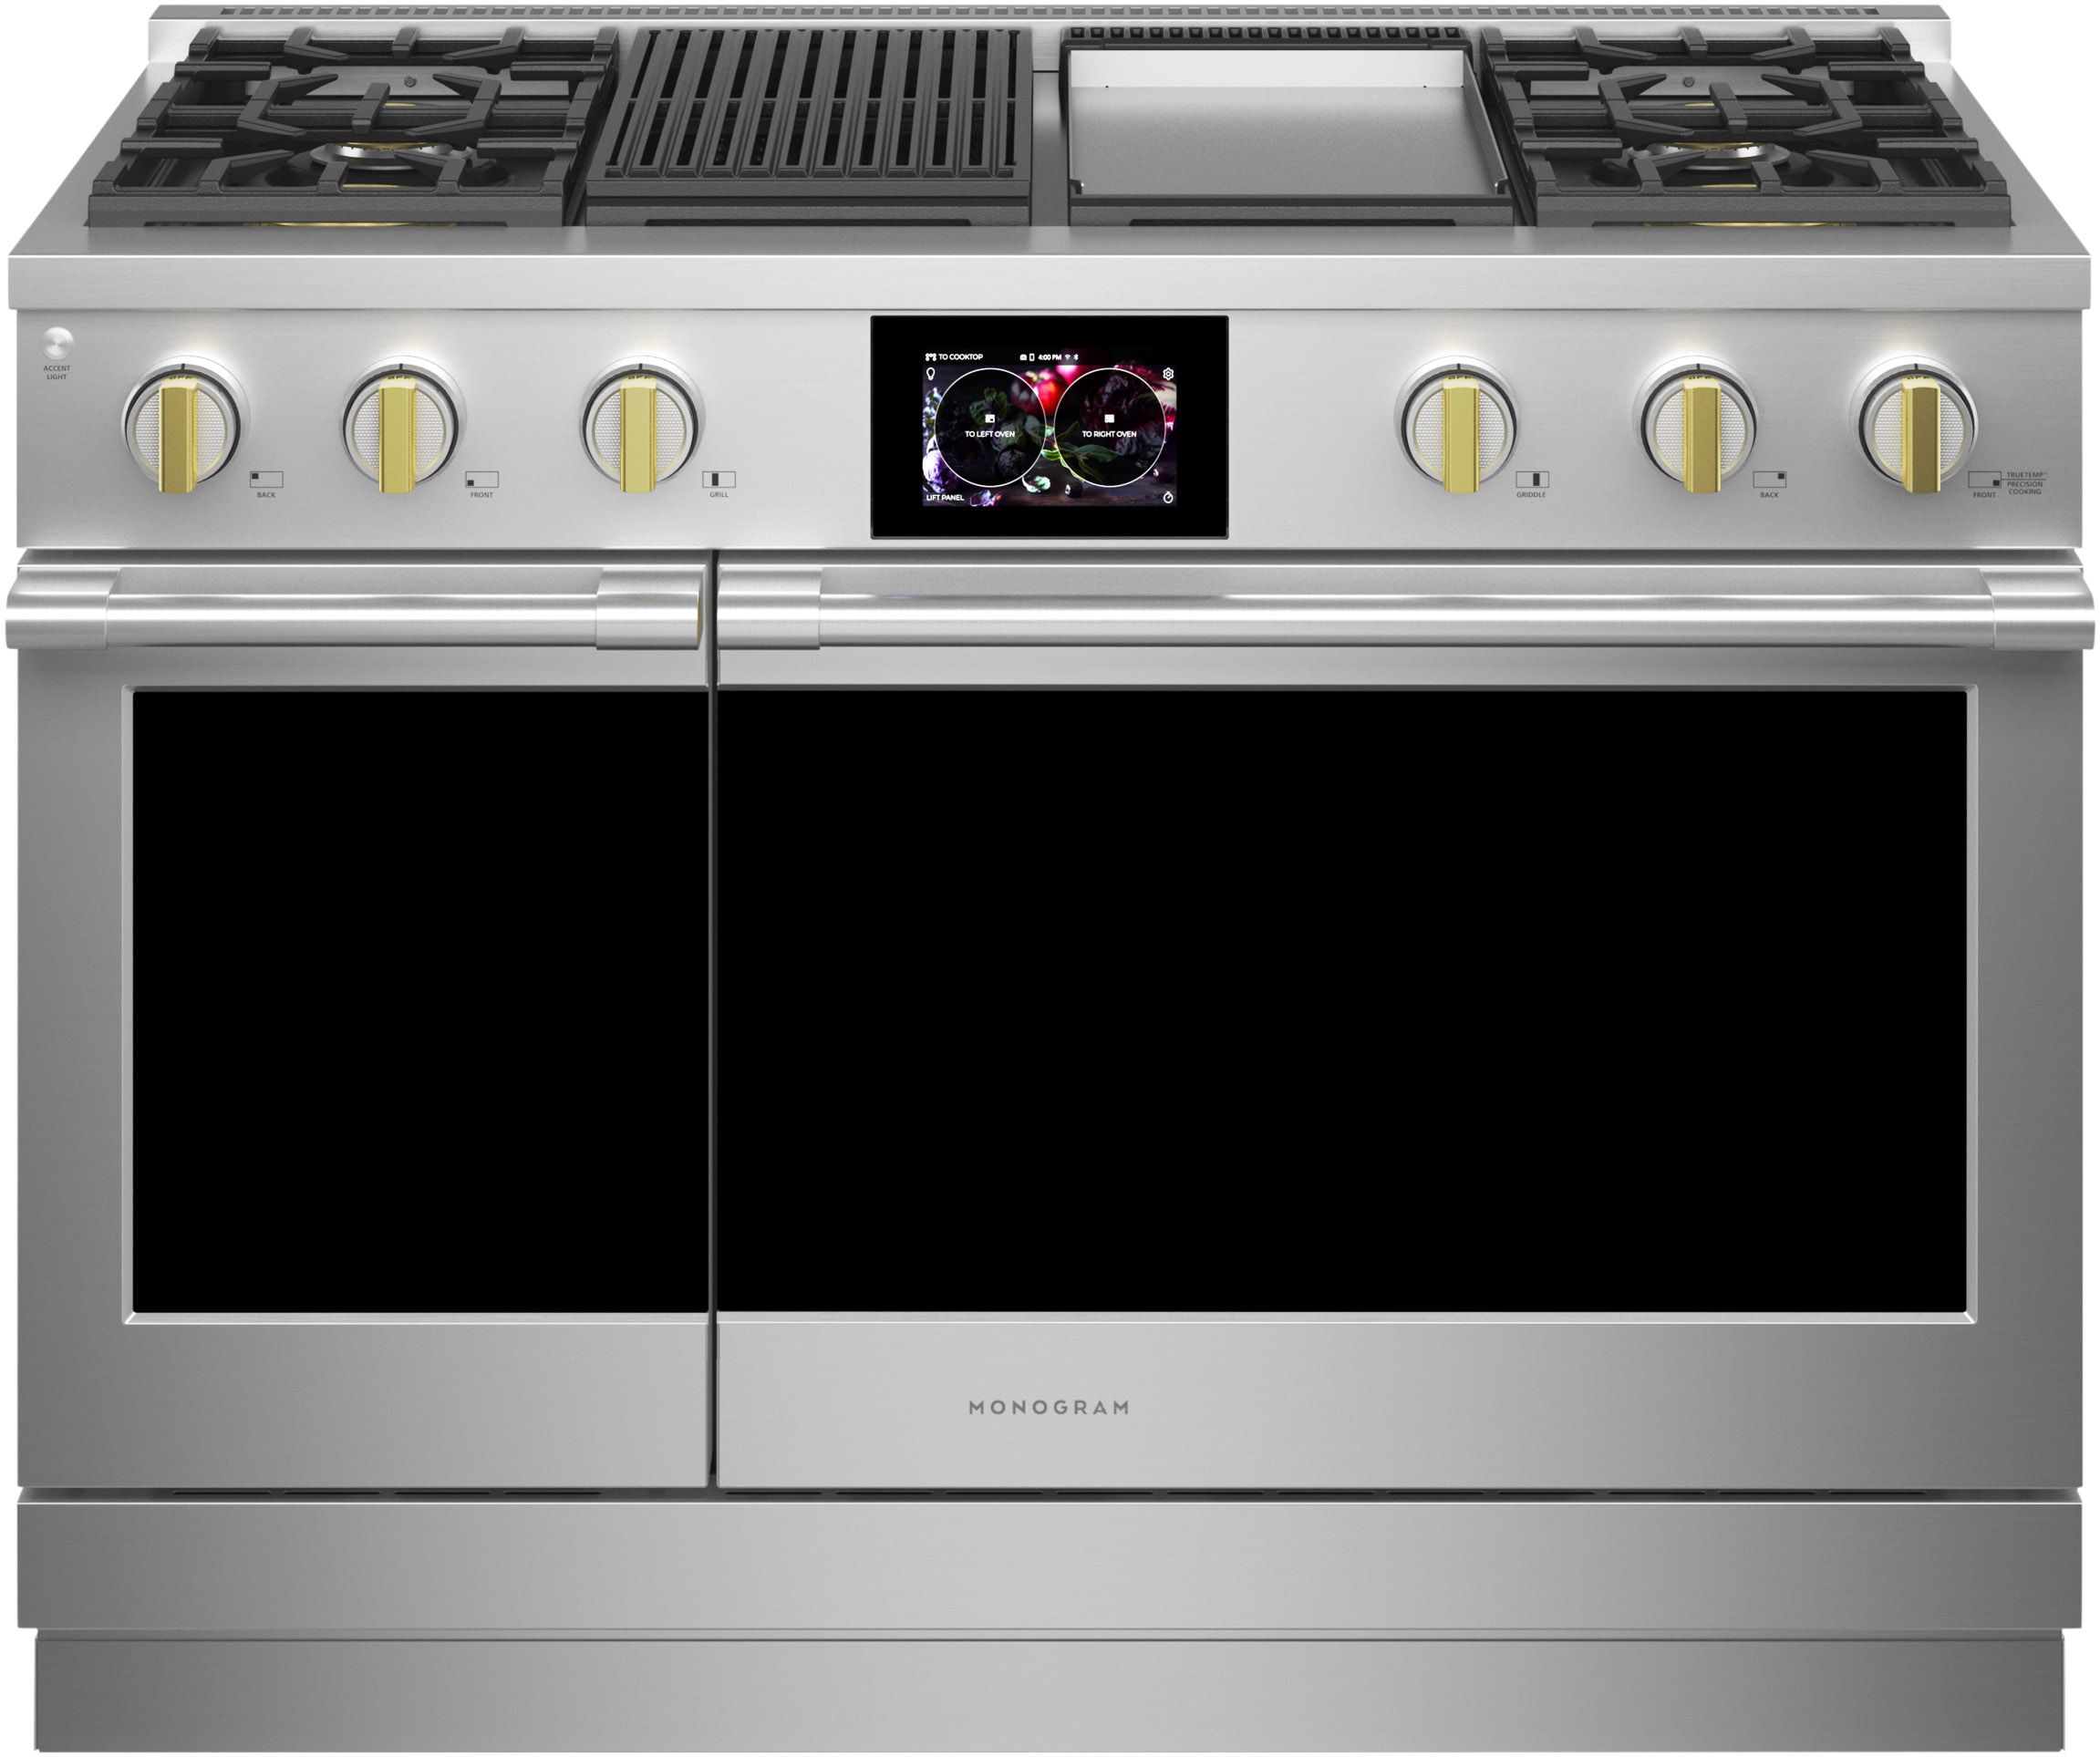 honogram professional range oven